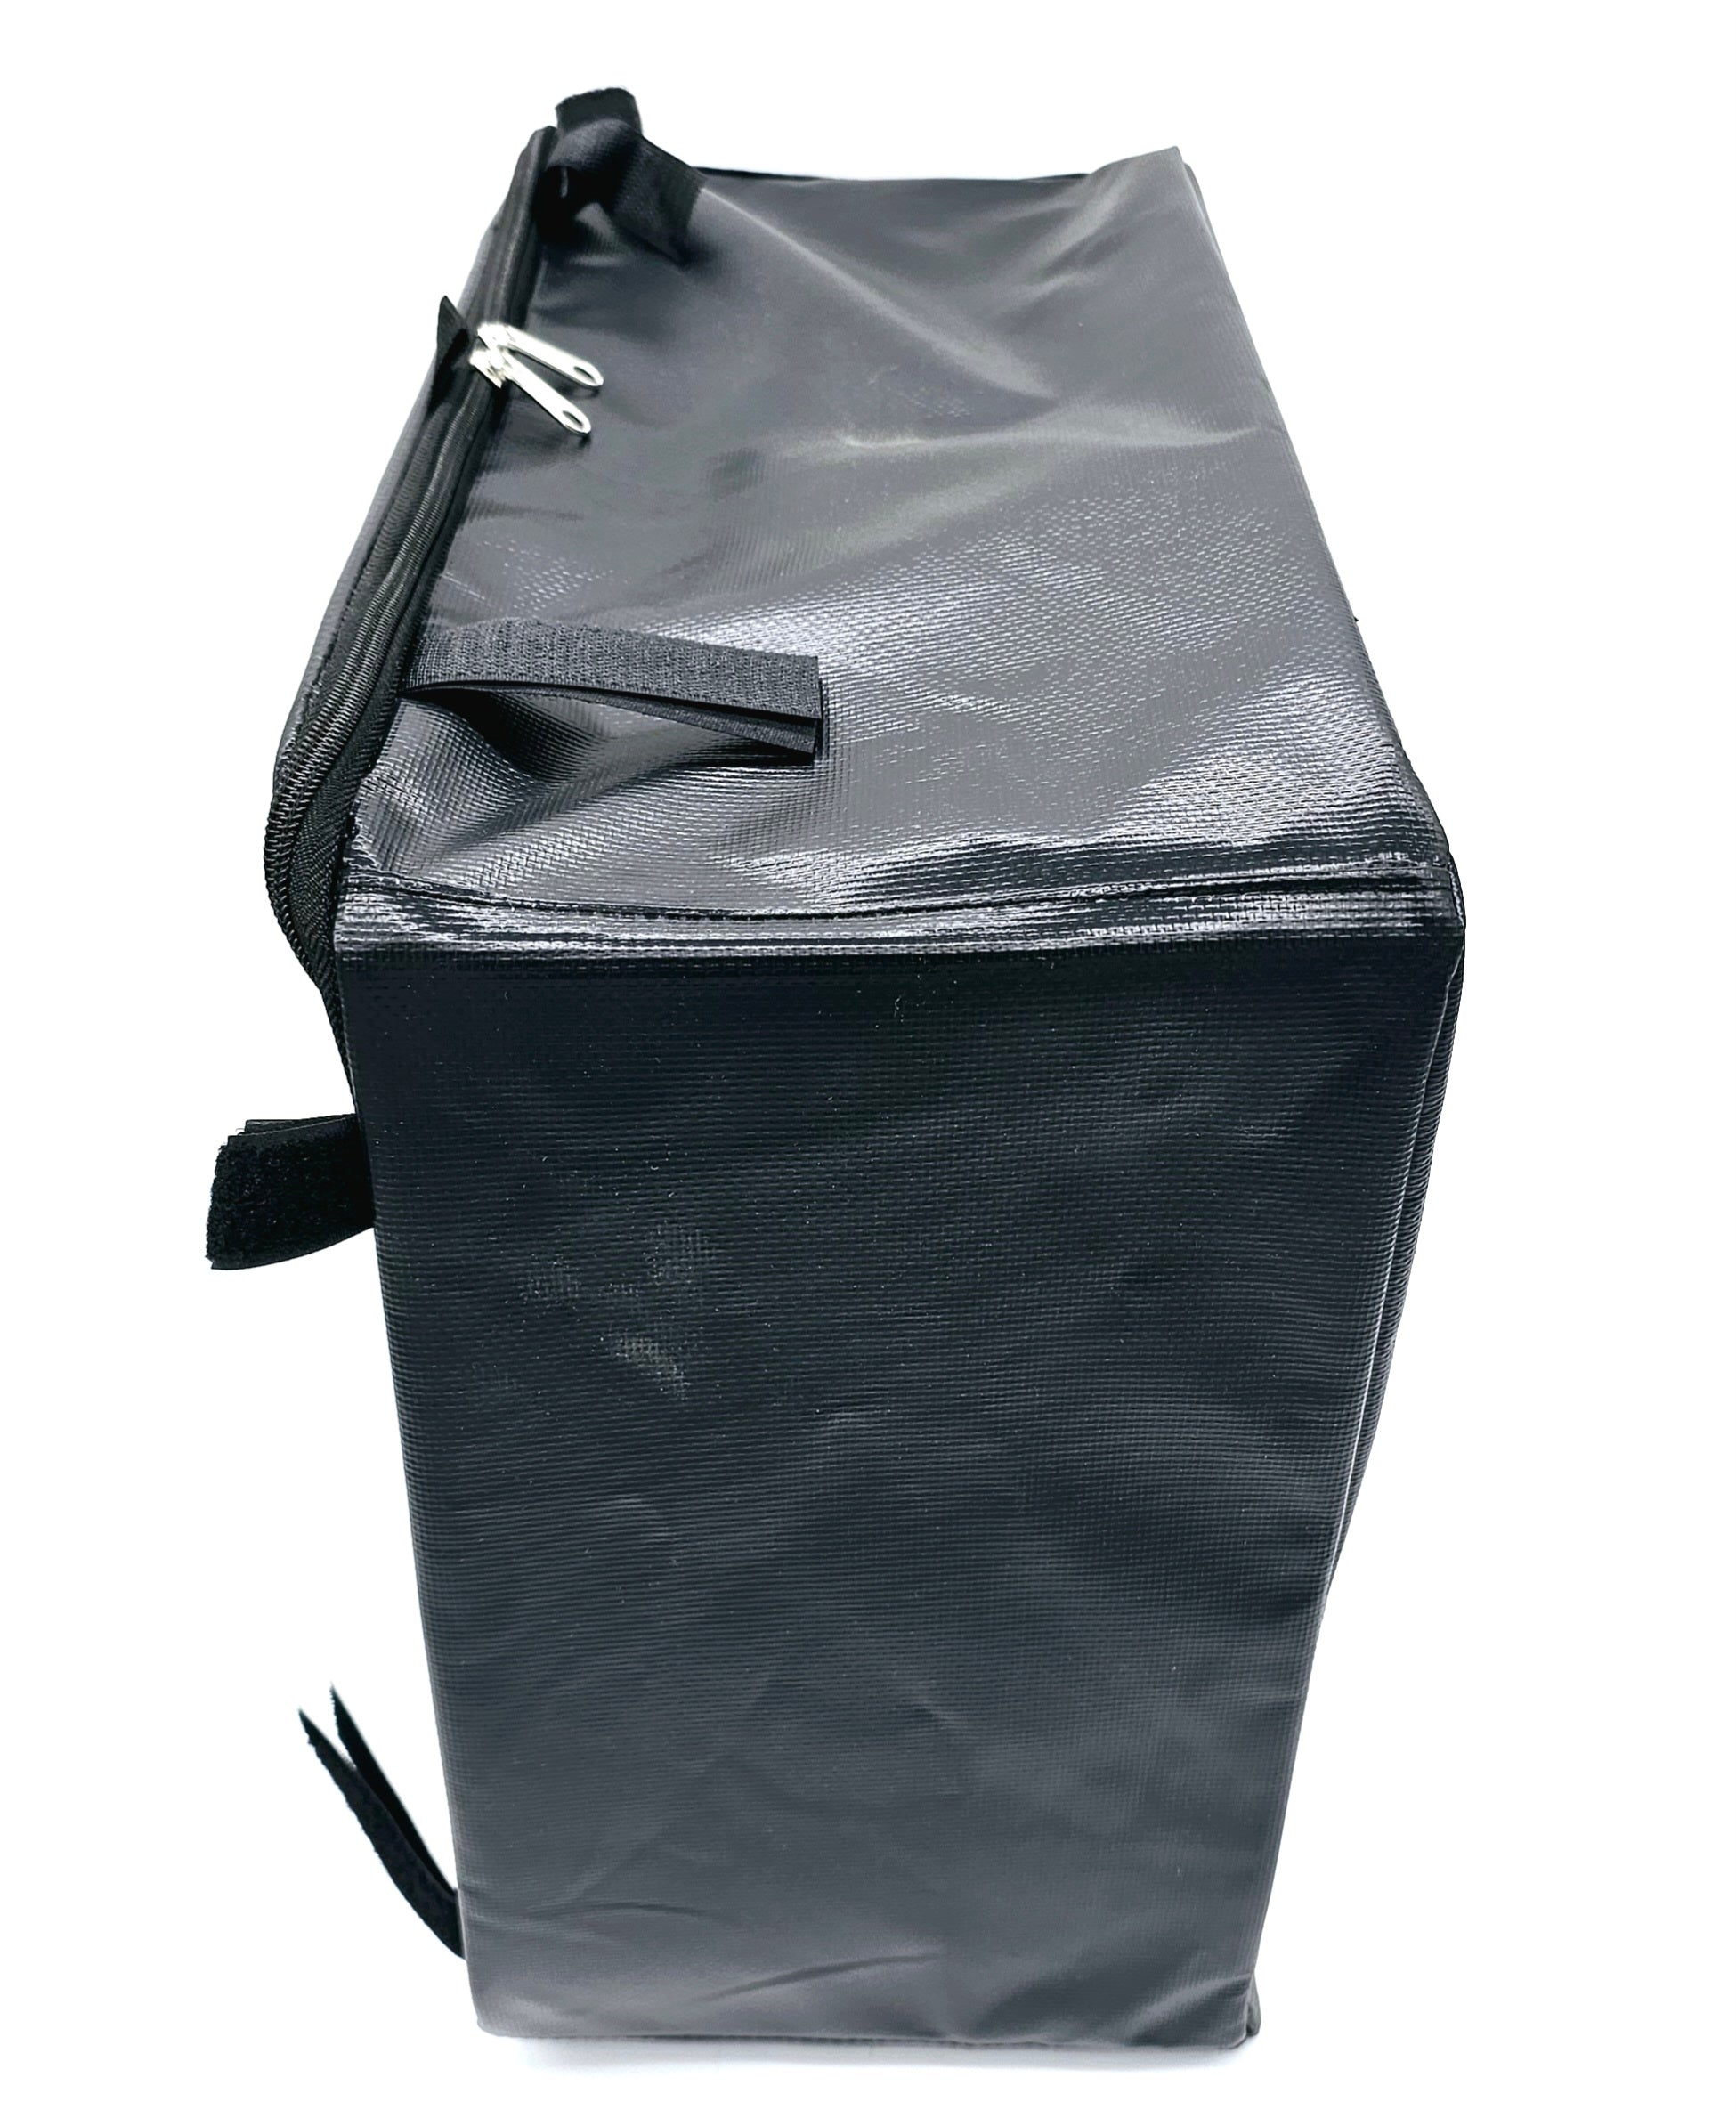 Tri-Cycle Bag